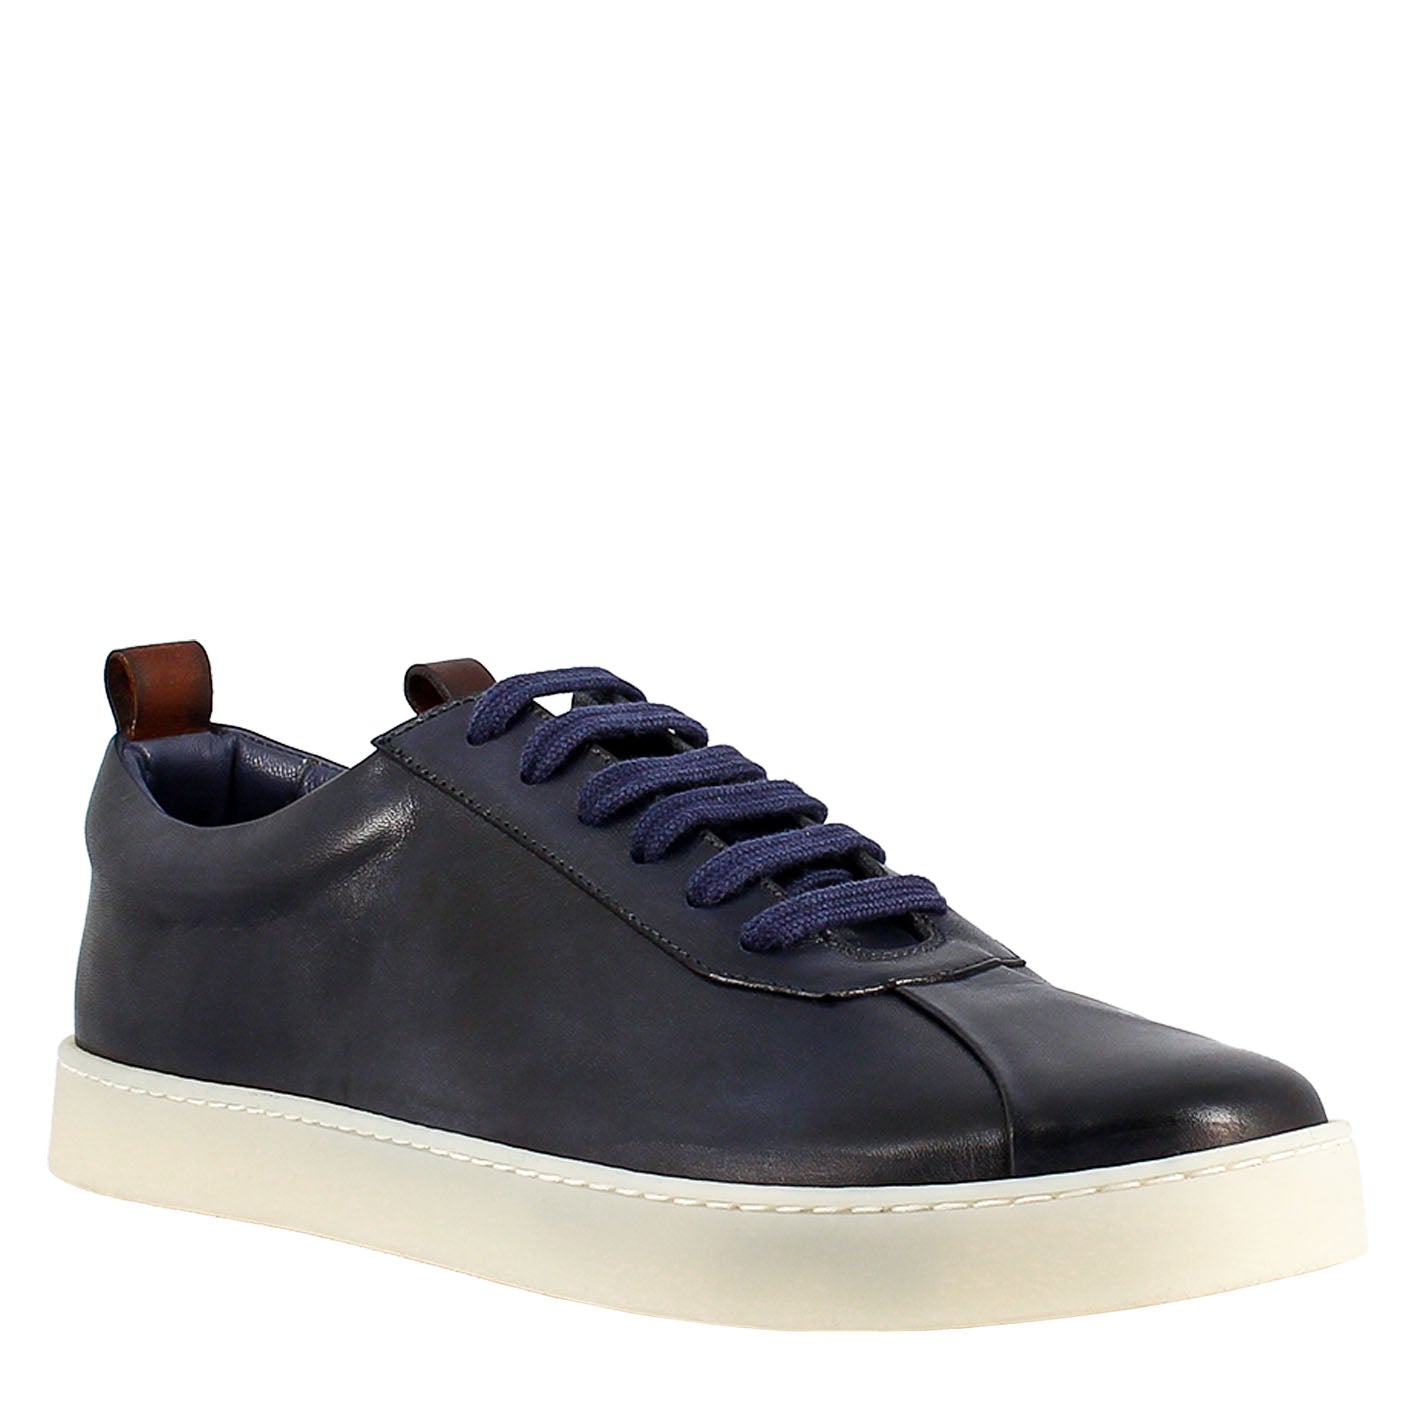 Elegant blue sneaker for men in smooth leather